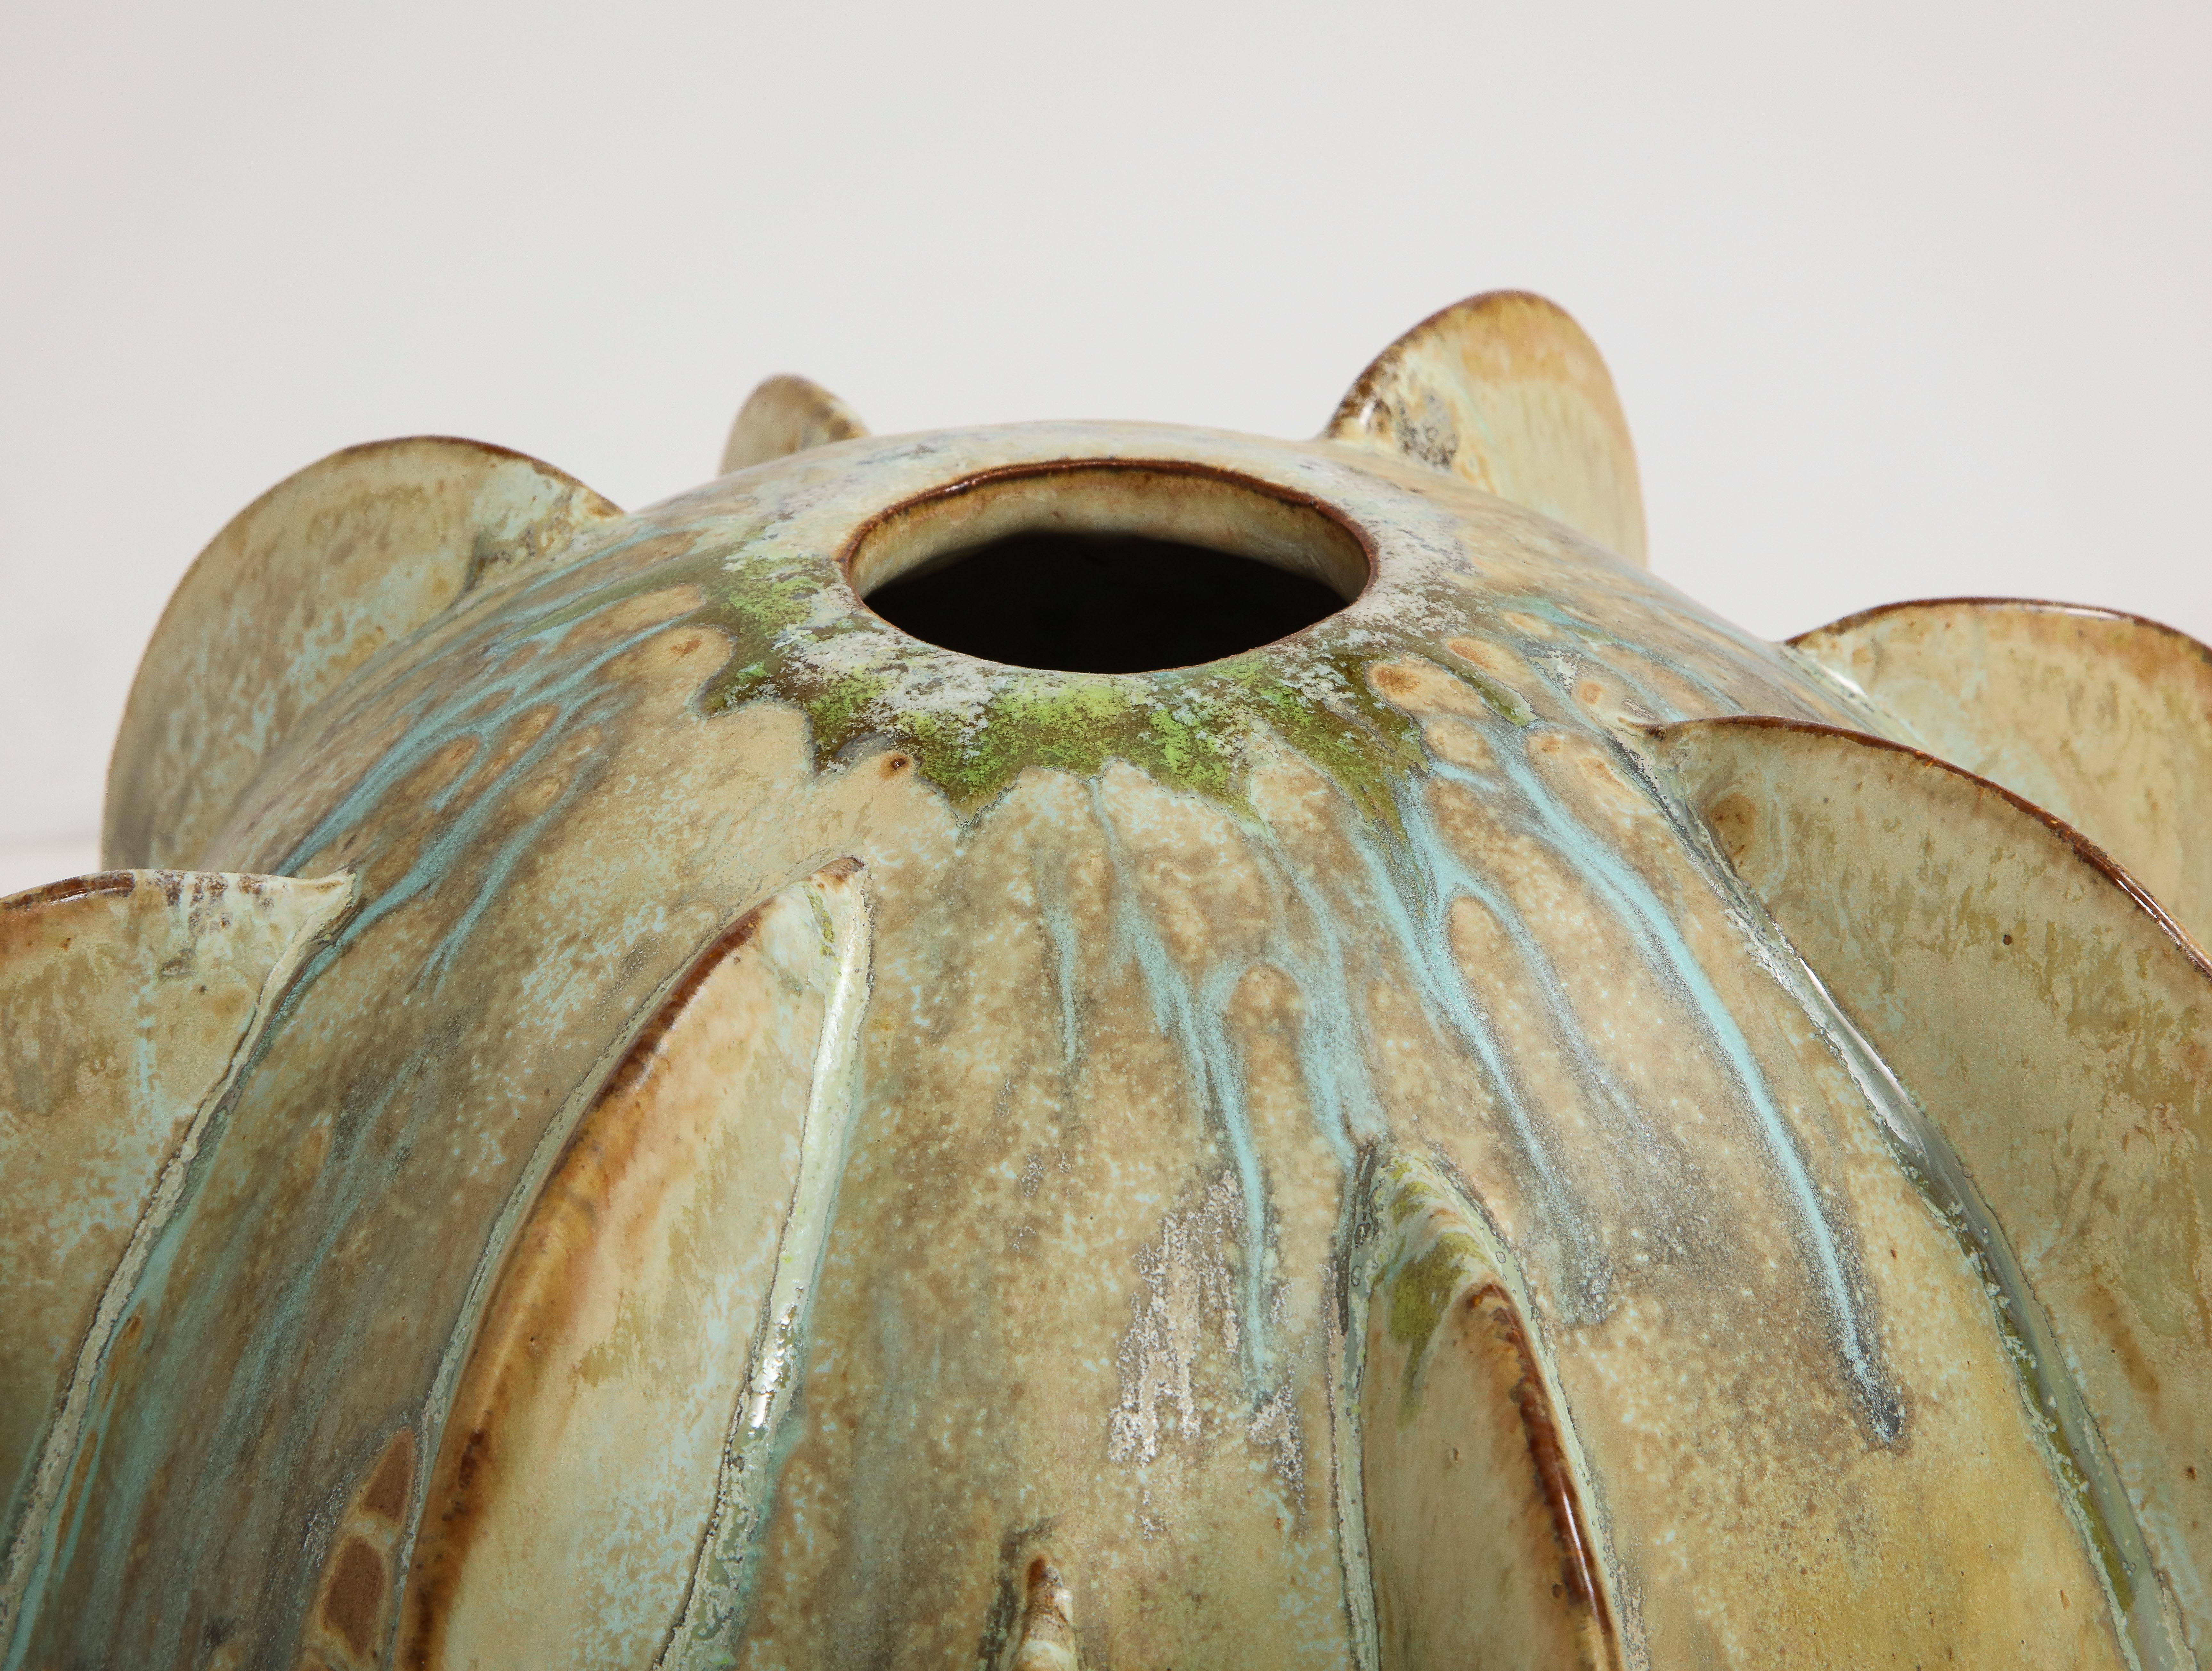 Untitled Orb vase #4 by Robbie Heidinger. Hand-built stoneware vase. Artist-signed on bottom.